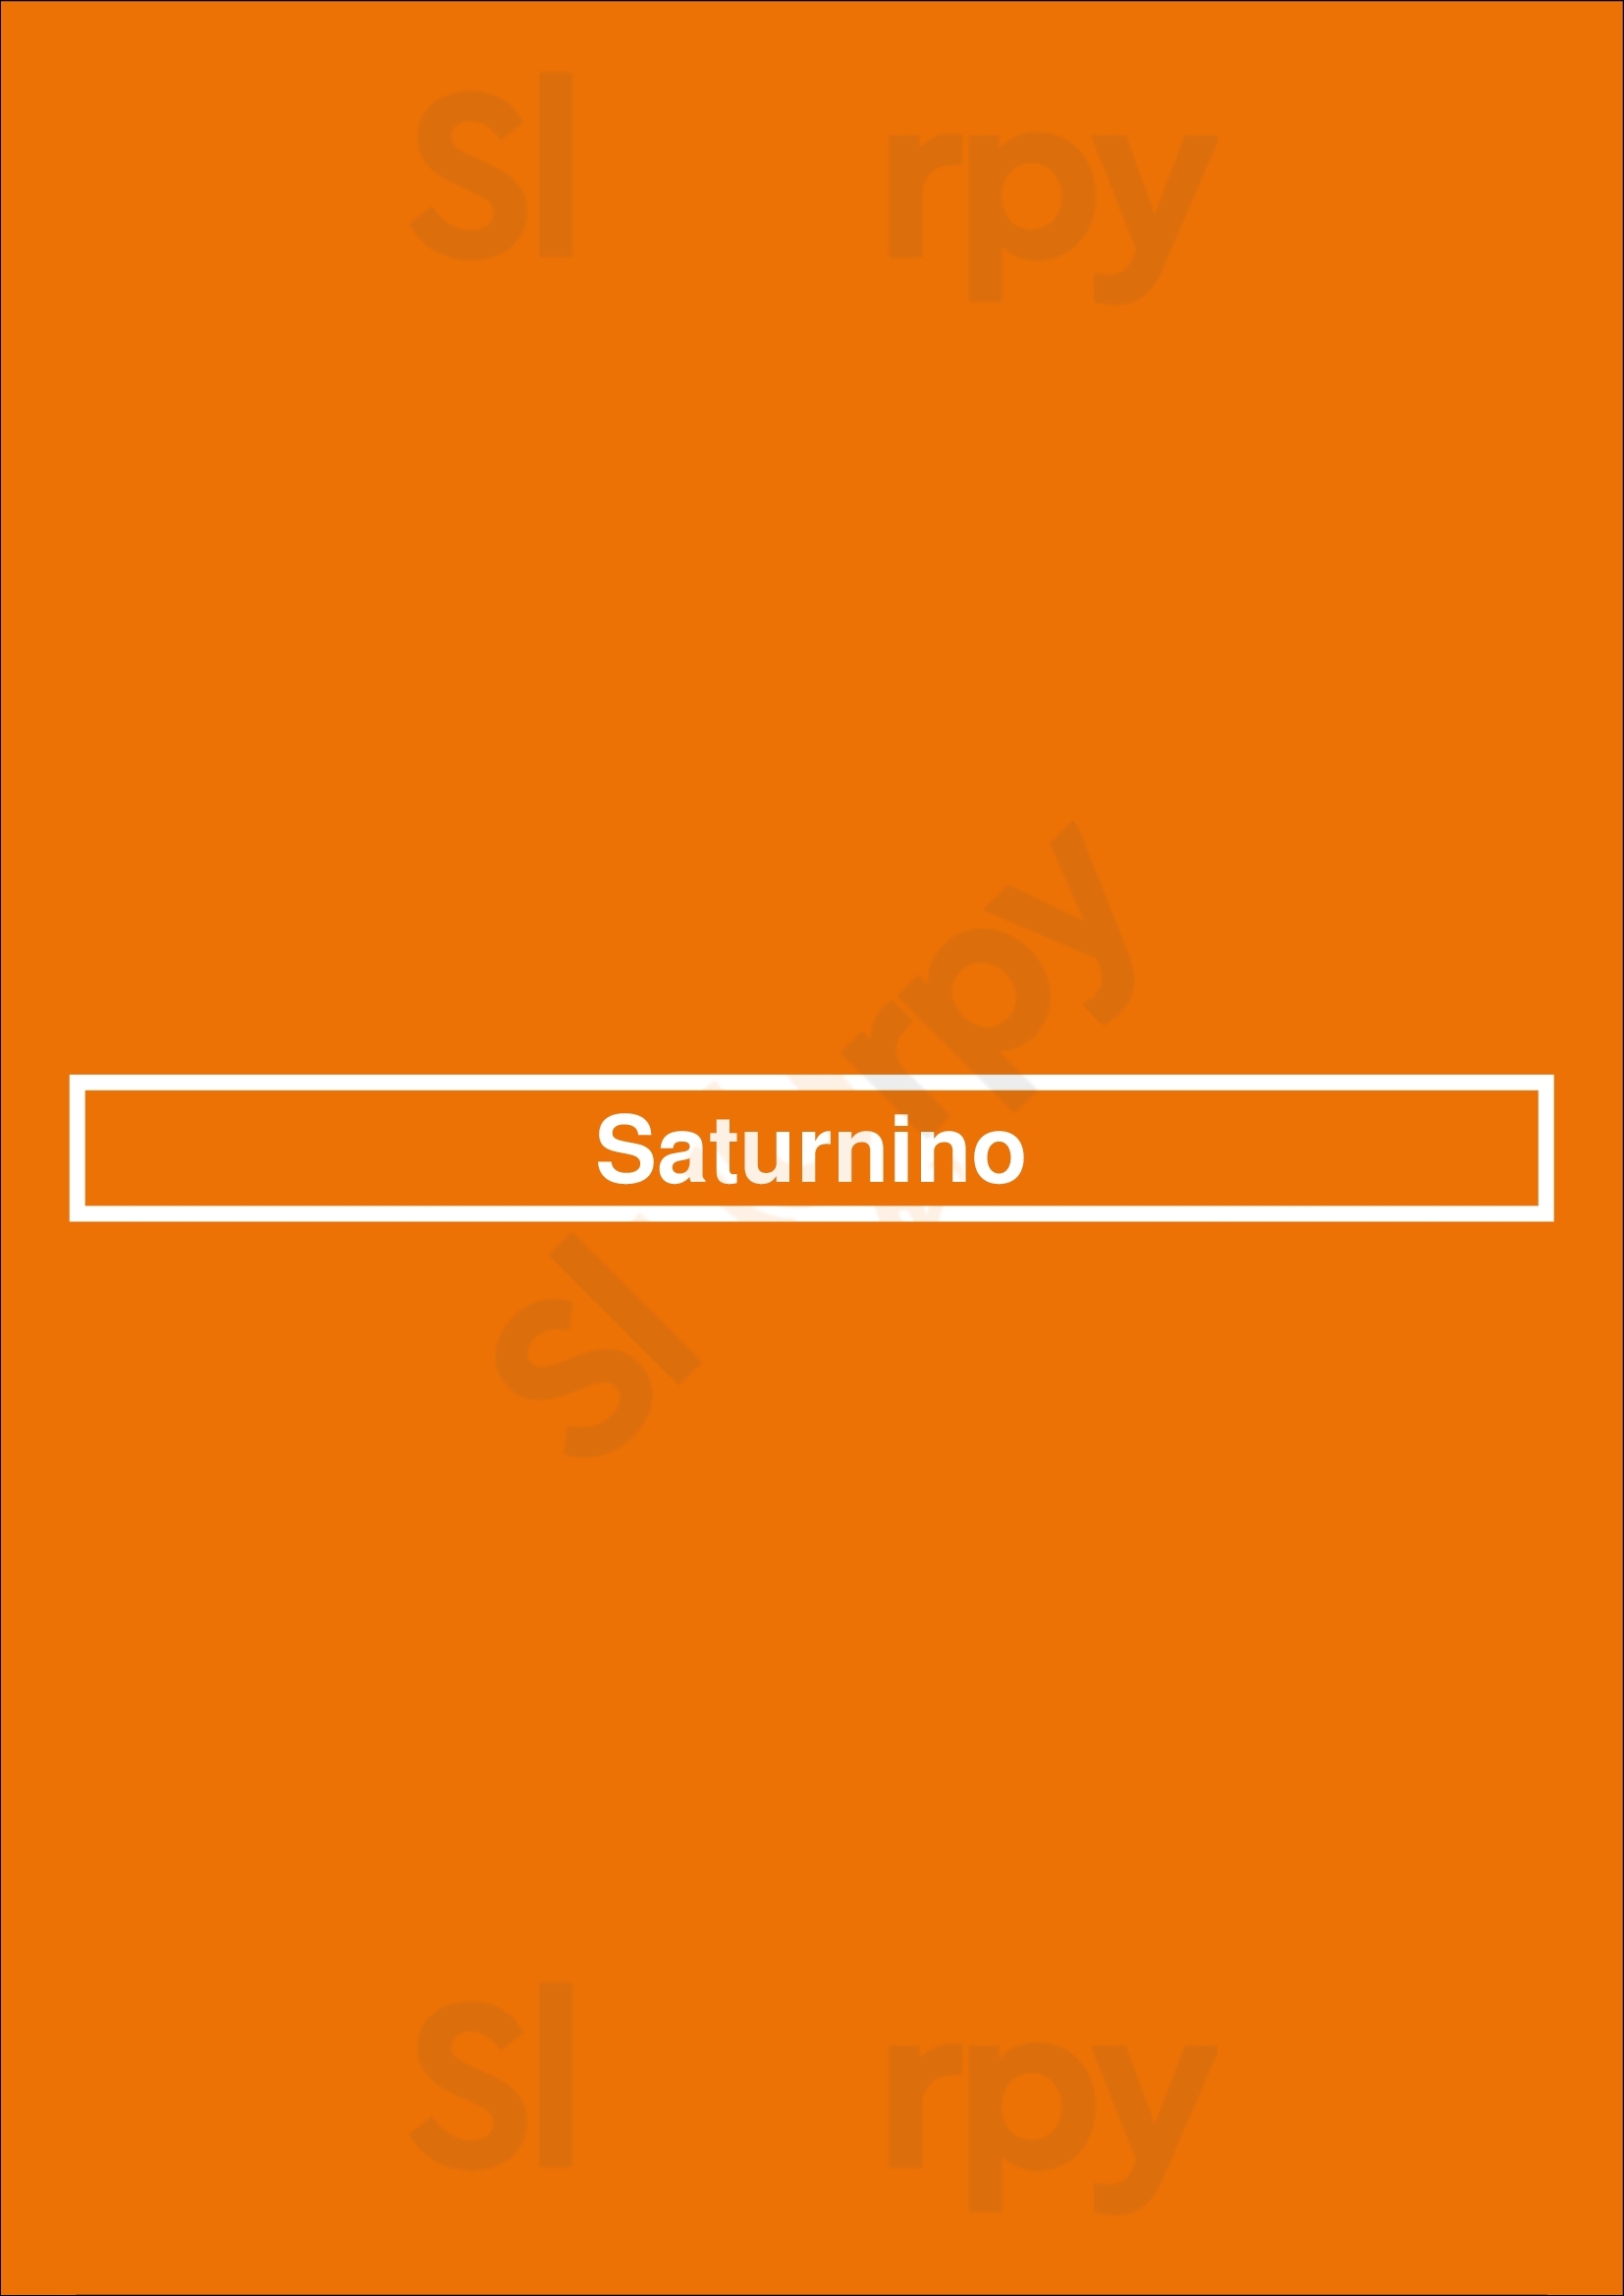 Saturnino Amsterdam Menu - 1